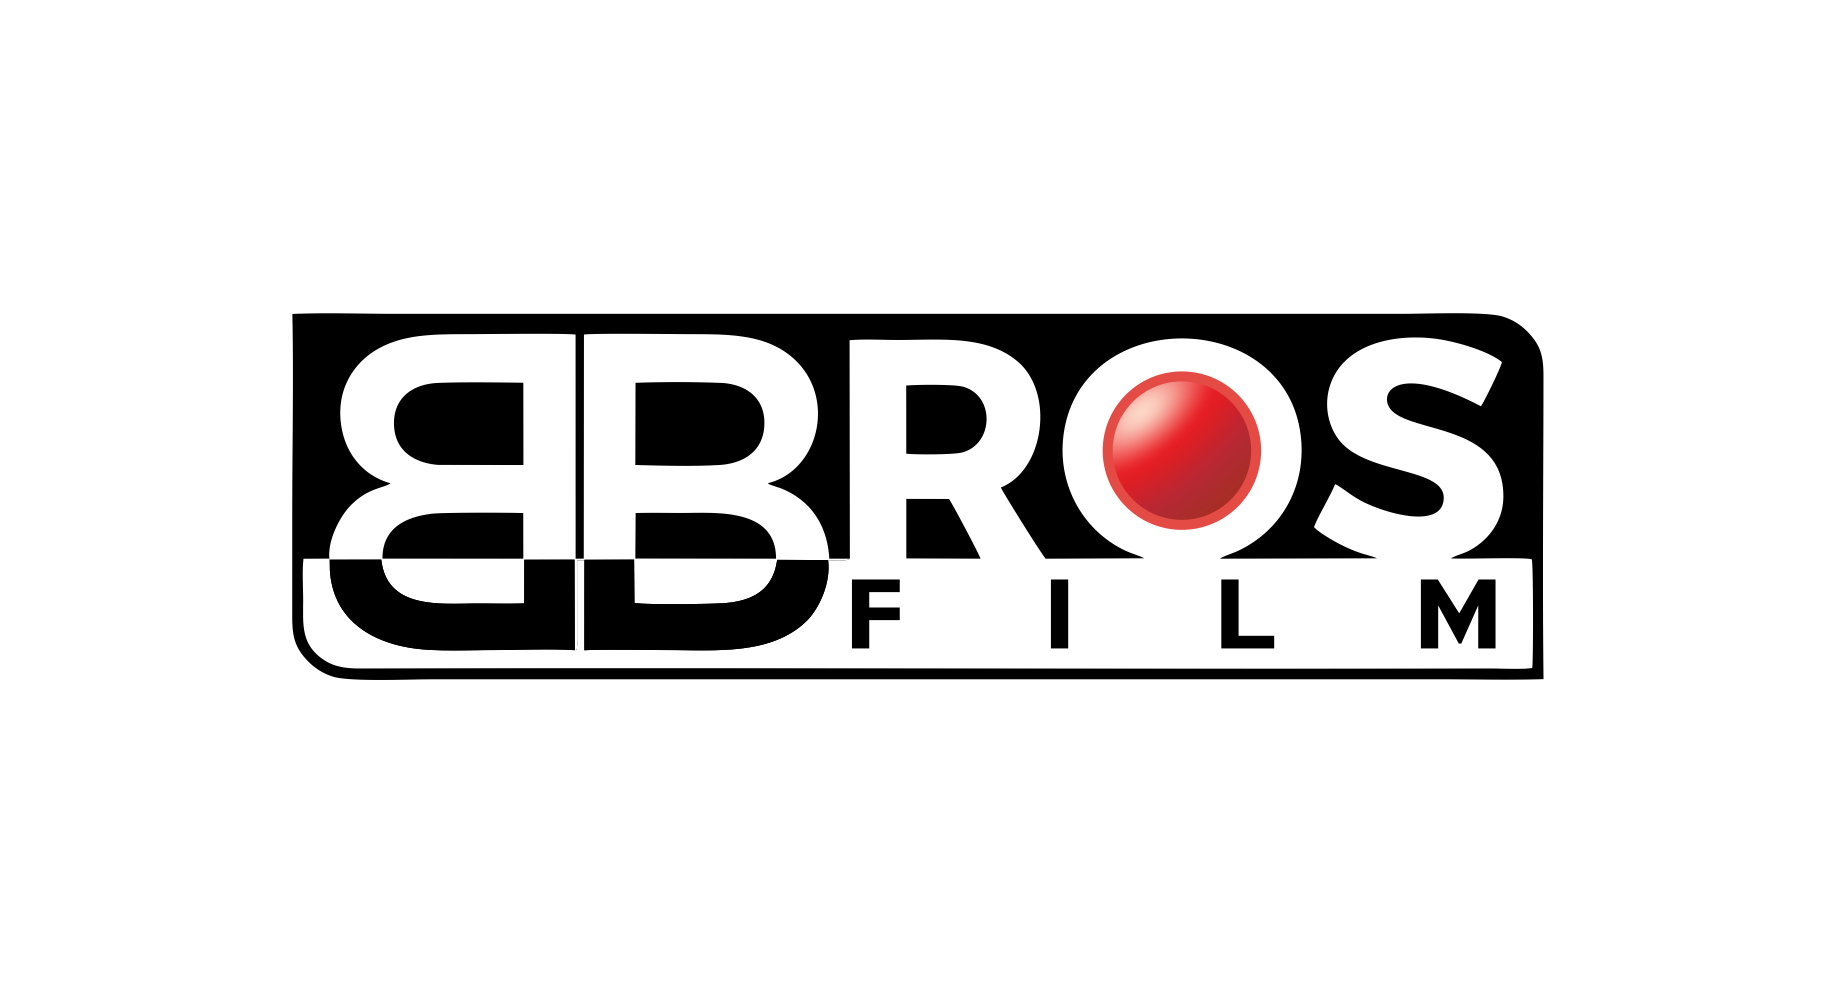 BBros Film